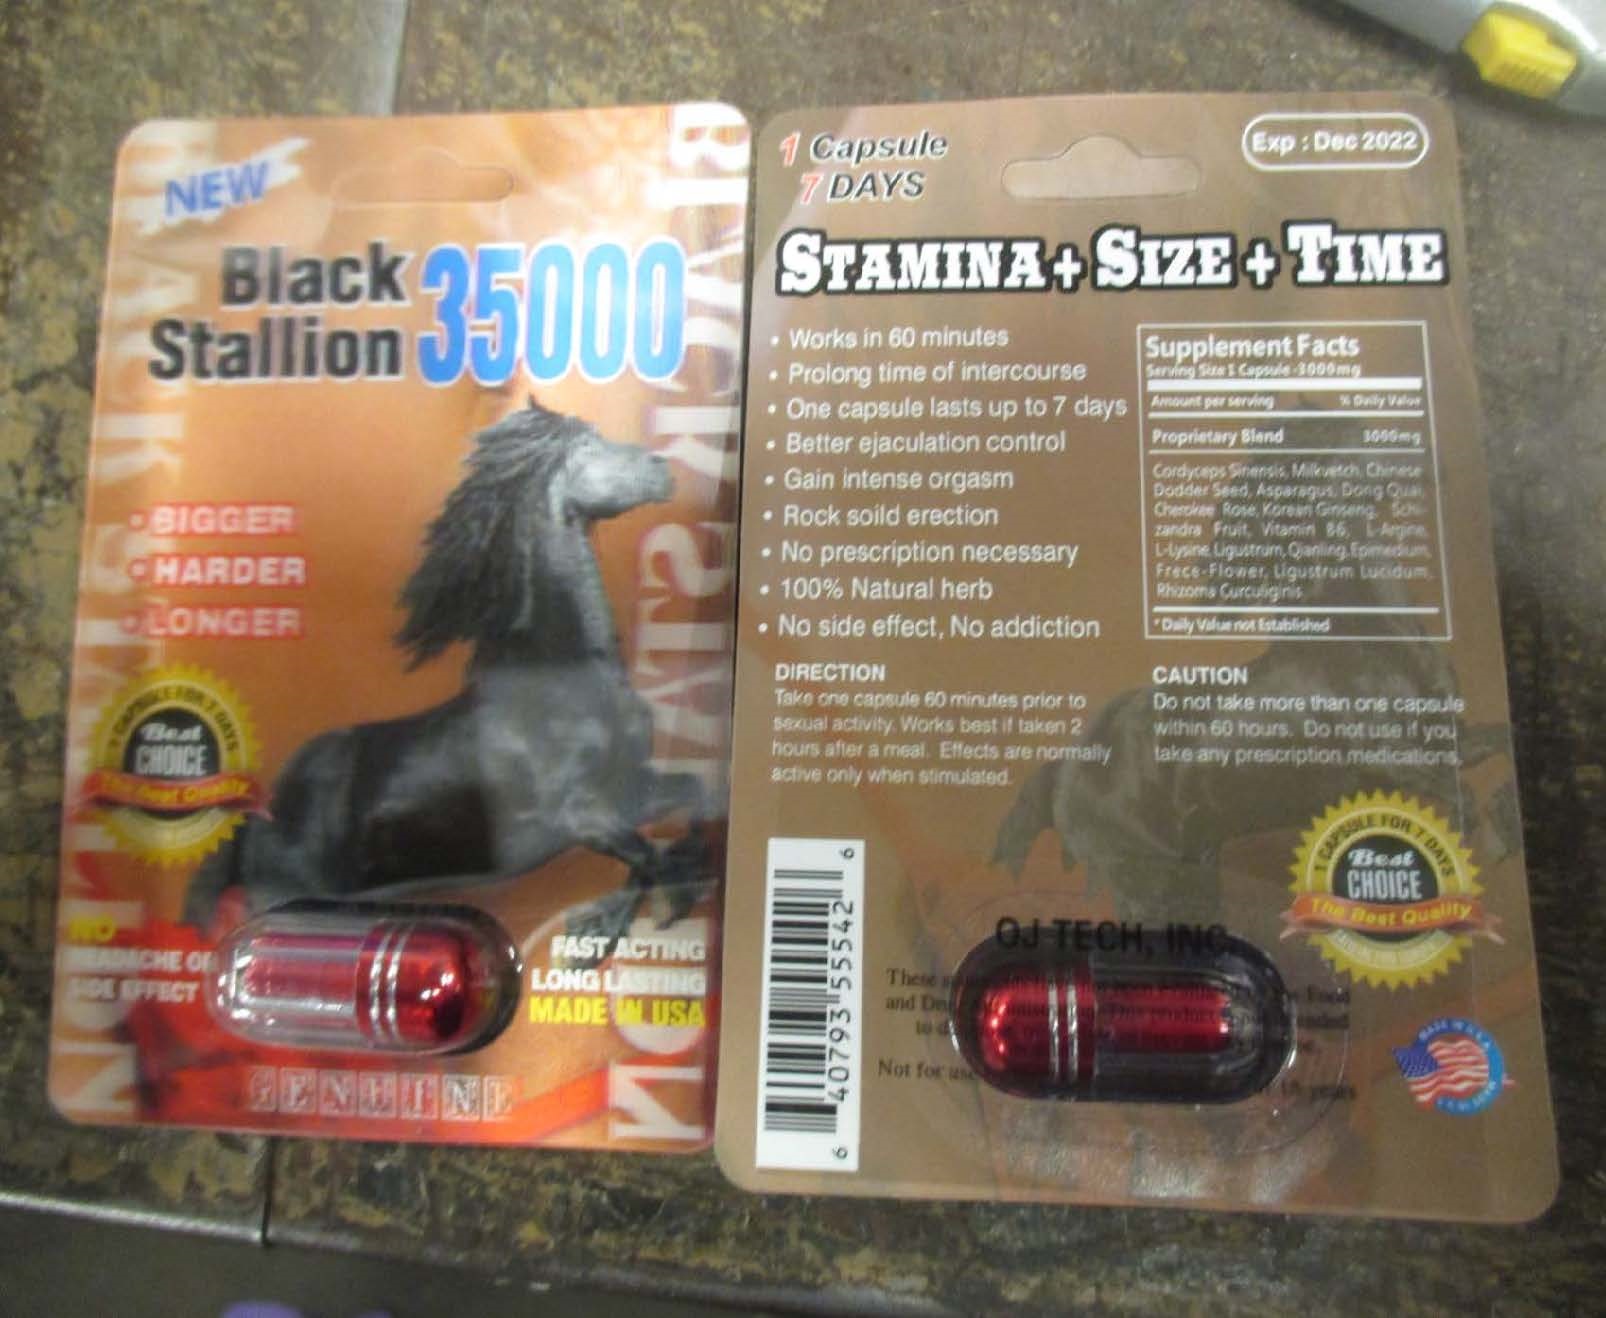 Image of Black Stallion 35000